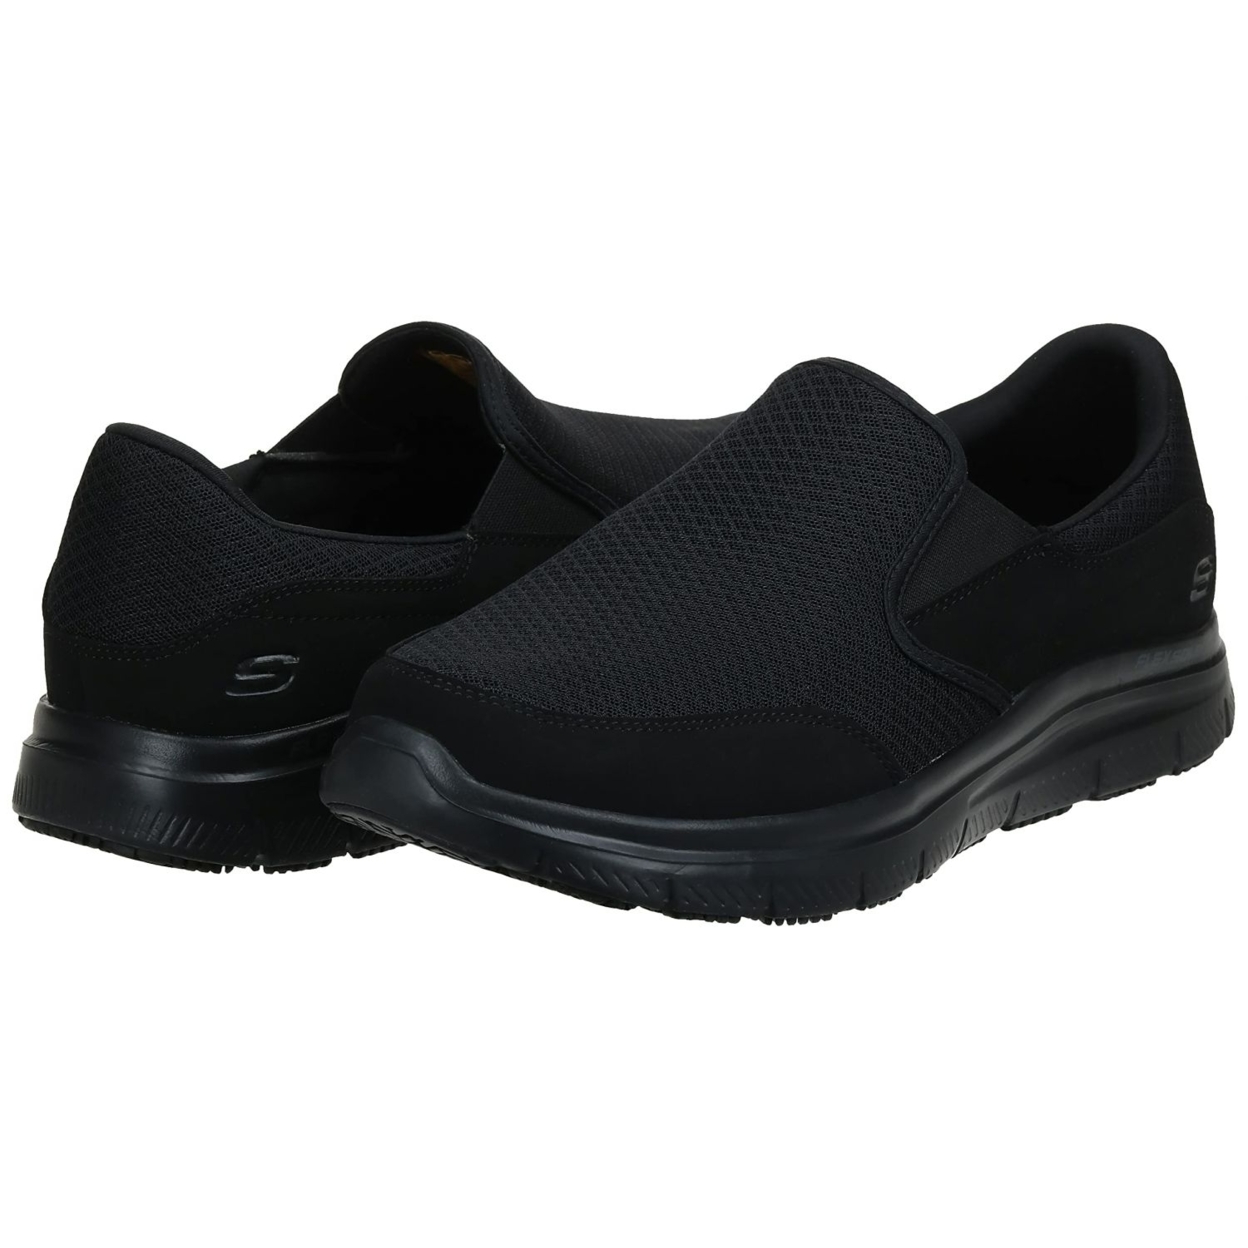 Skechers For Work Men's Flex Advantage Mcallen Food Service Shoe ONE SIZE BLACK - BLACK, 11.5 Wide